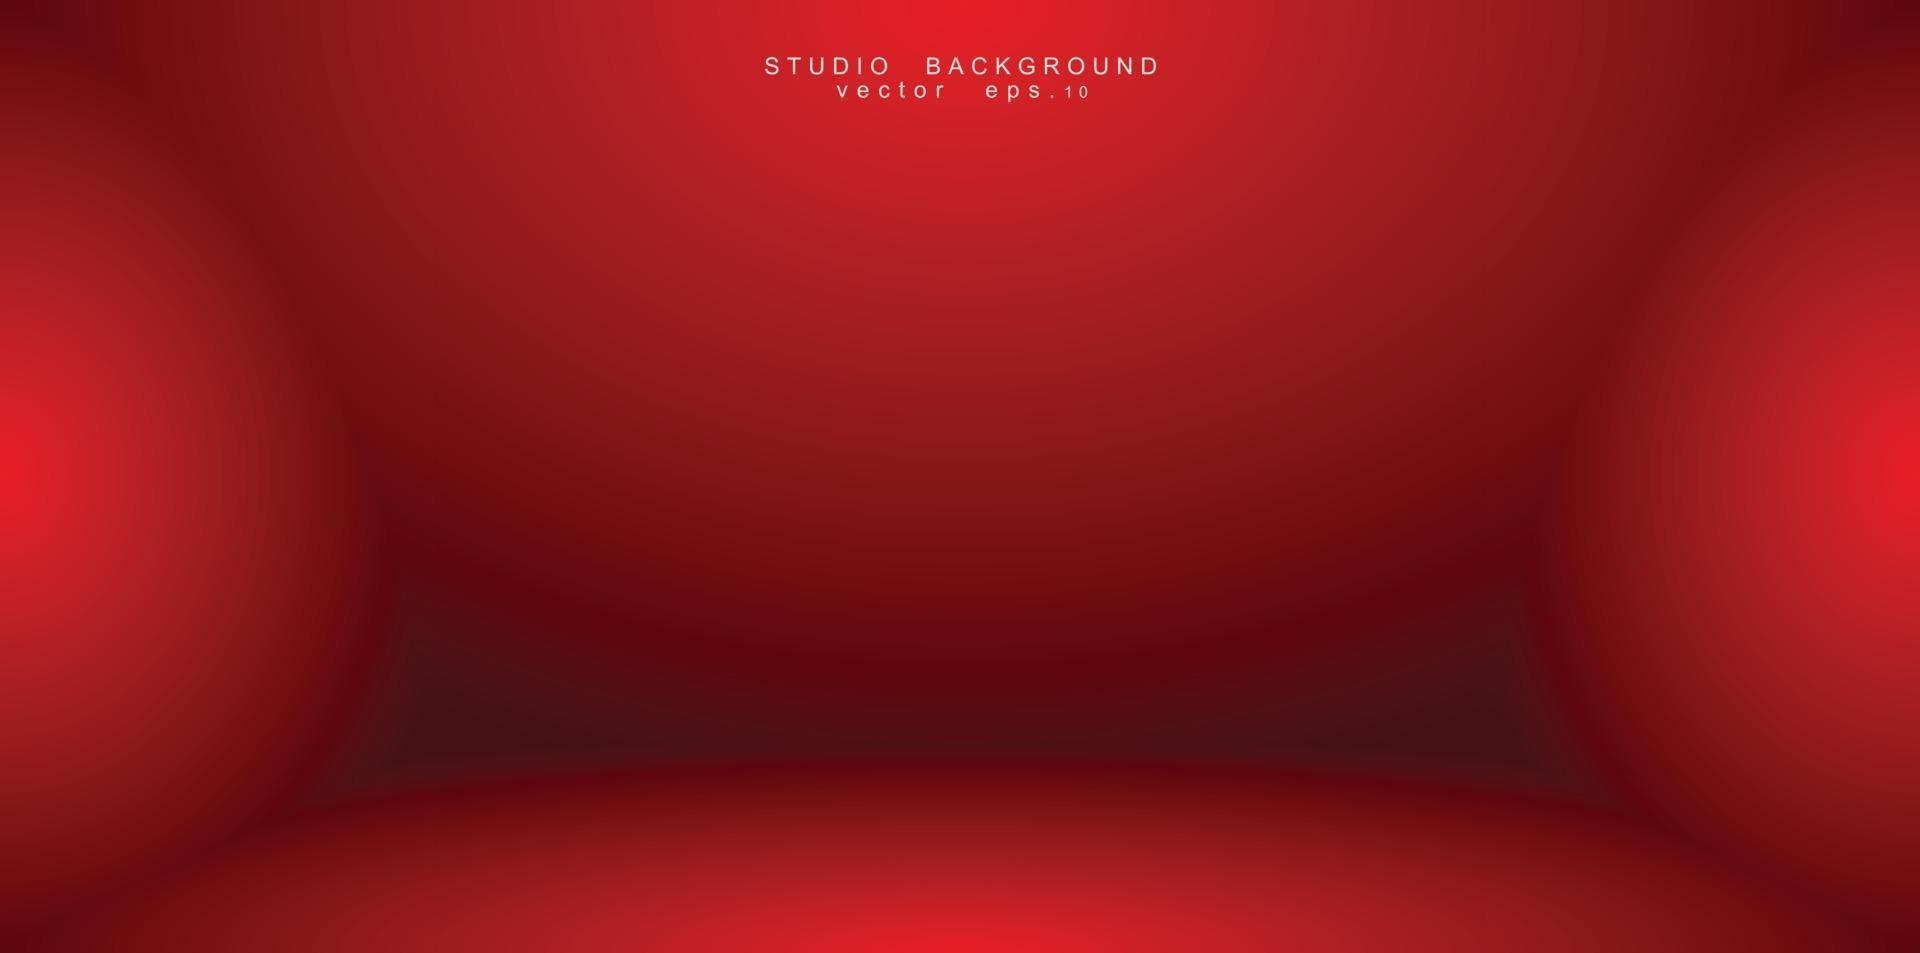 Empty red color studio room background vector